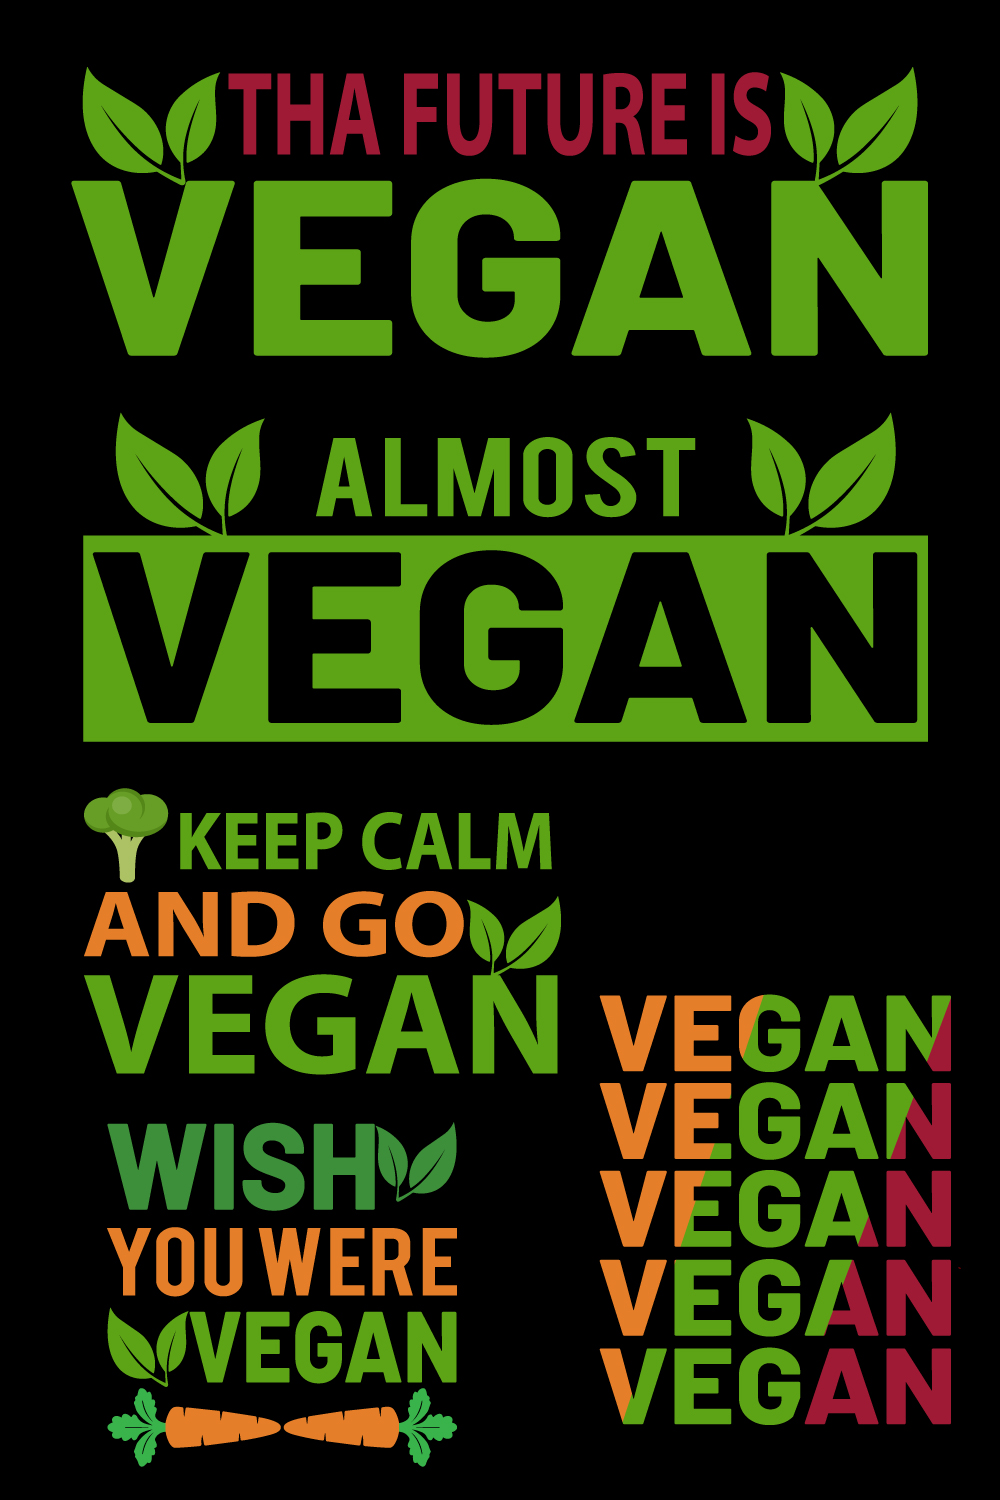 World Vegan Day T shirt Design Bundle pinterest preview image.